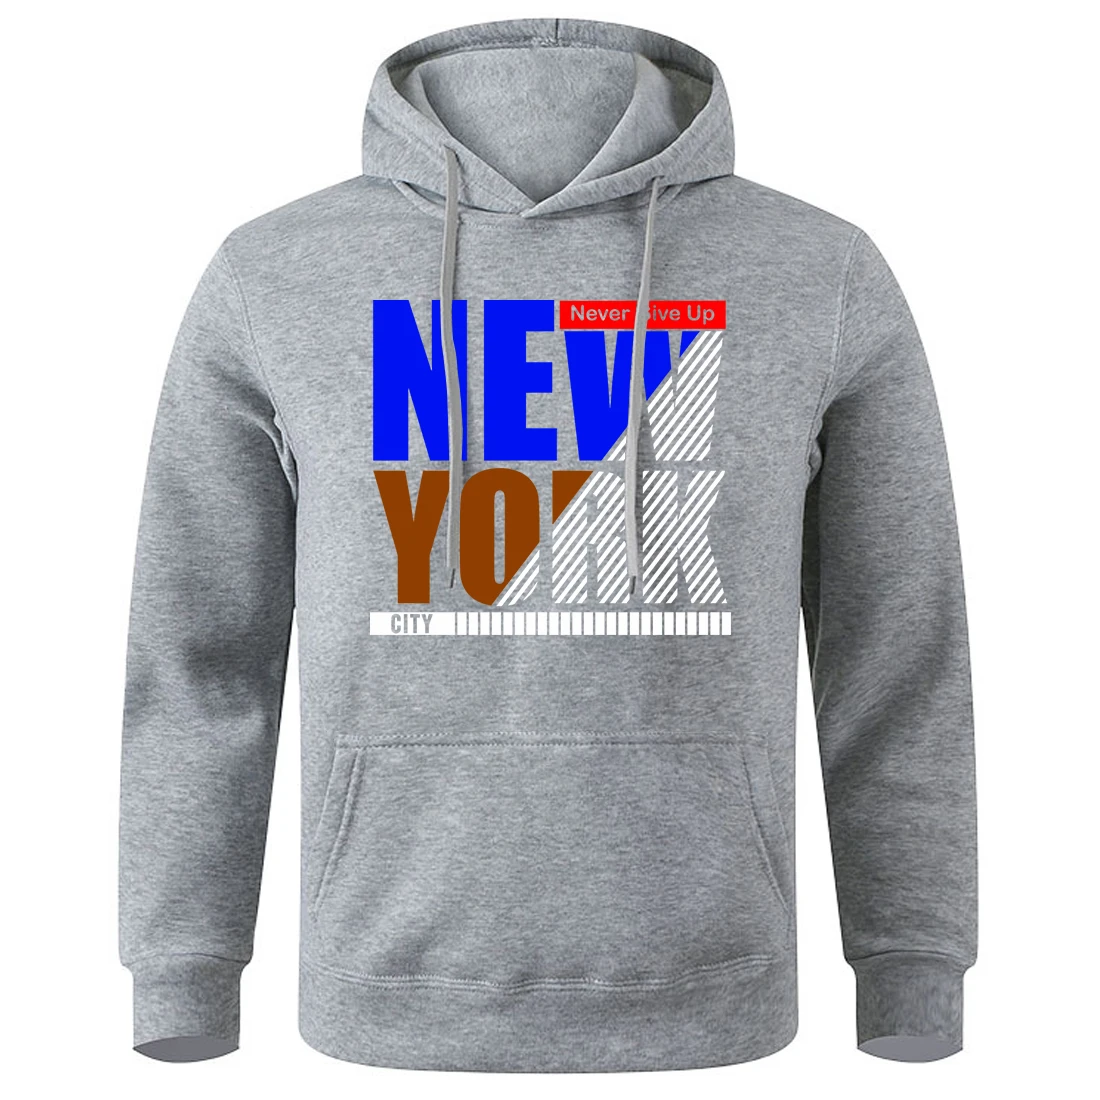 

Never Give Up New York City Street Hip Hop Men Hoody Warm Comfortable Hooded Casual Fashion Sweatshirt Basic Sports Male Hoodies